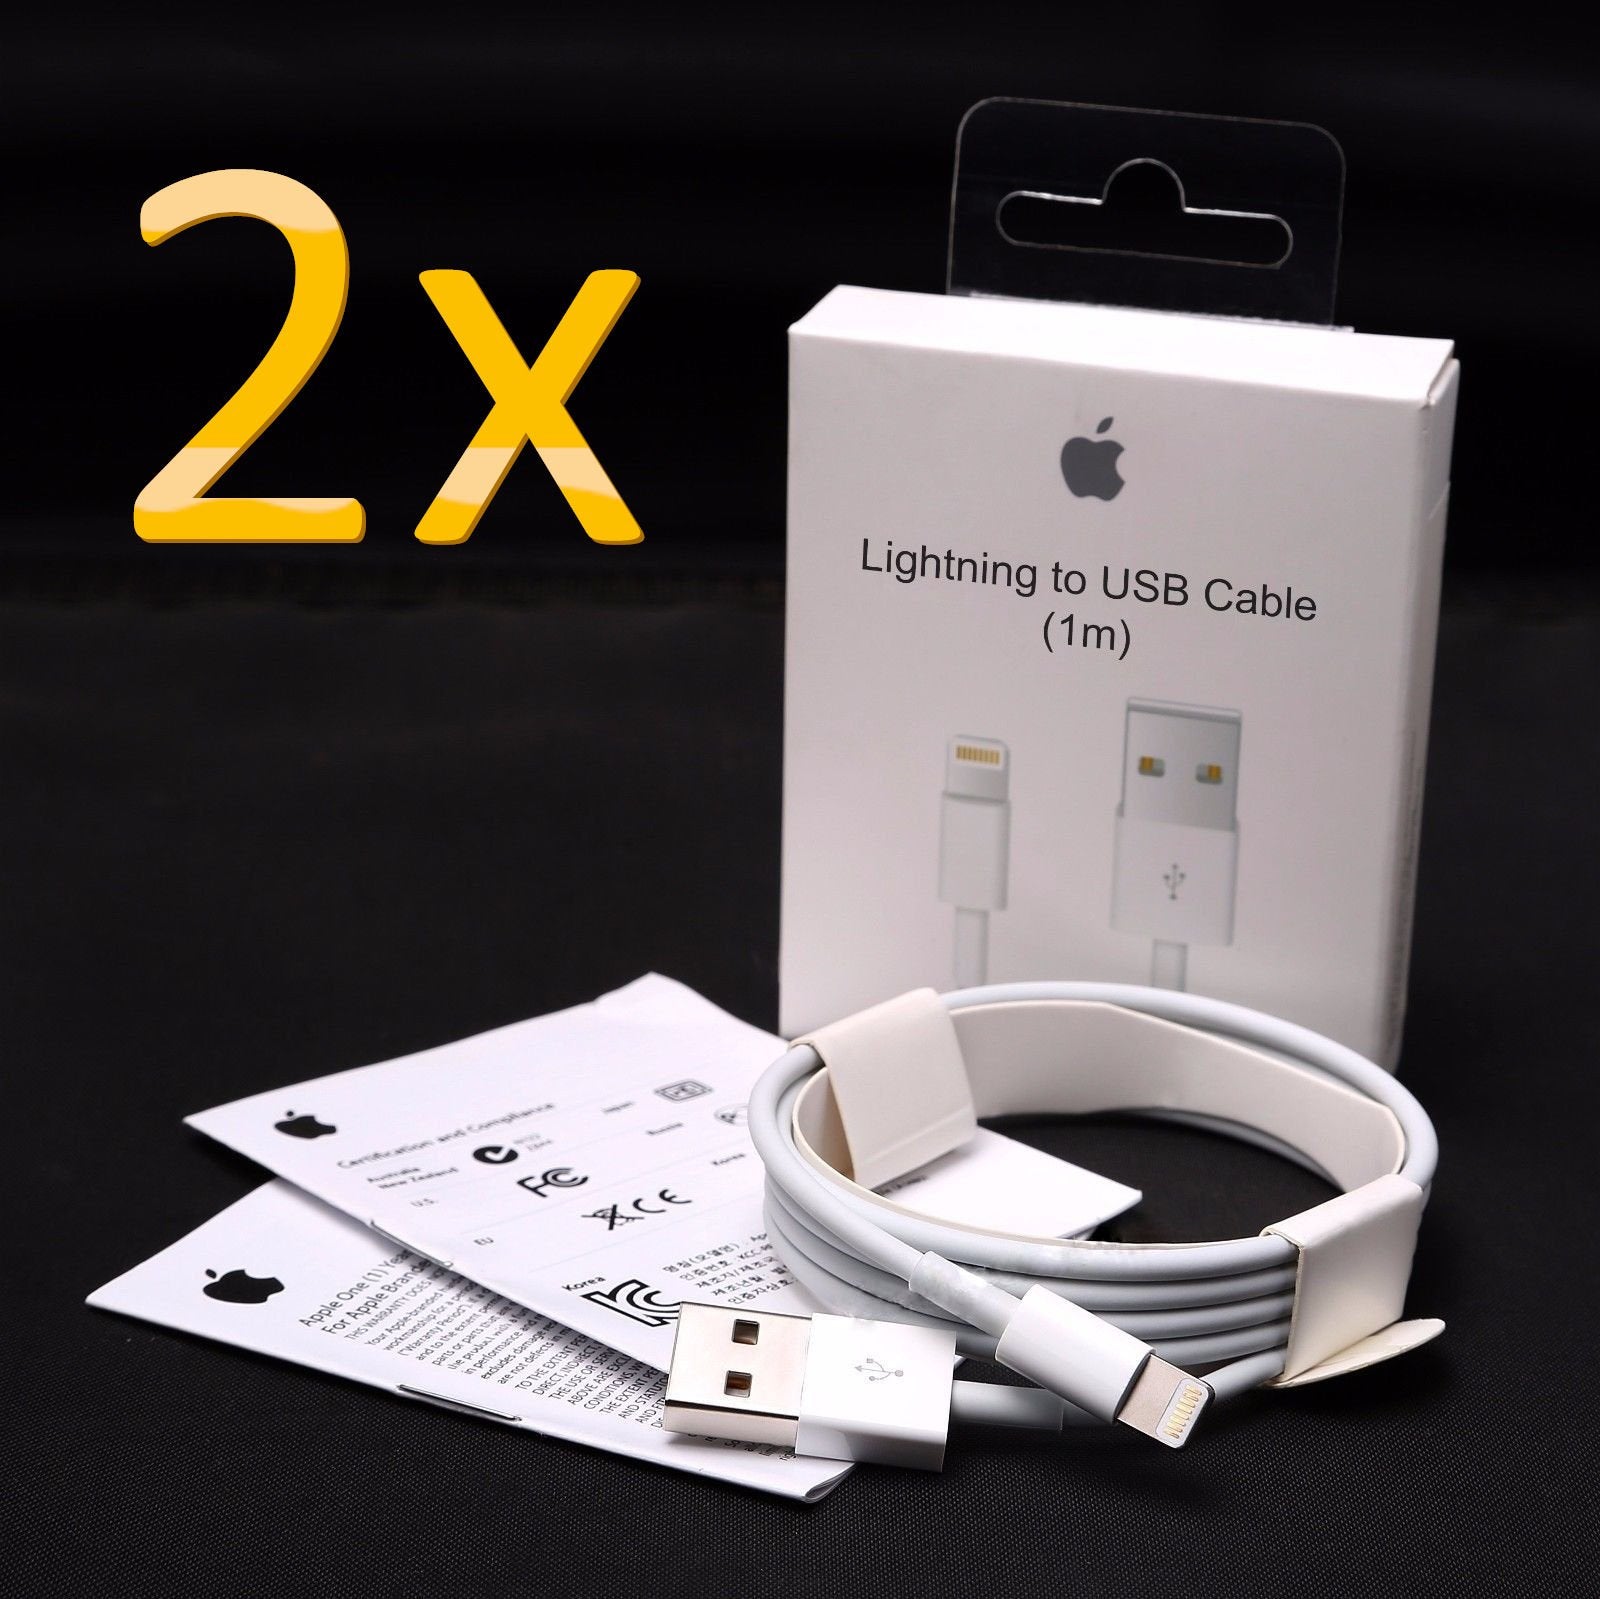 2x 1M Lightning Data Cable Charger iPhone 5 S C 6 7 + iPad - Zmart Australia